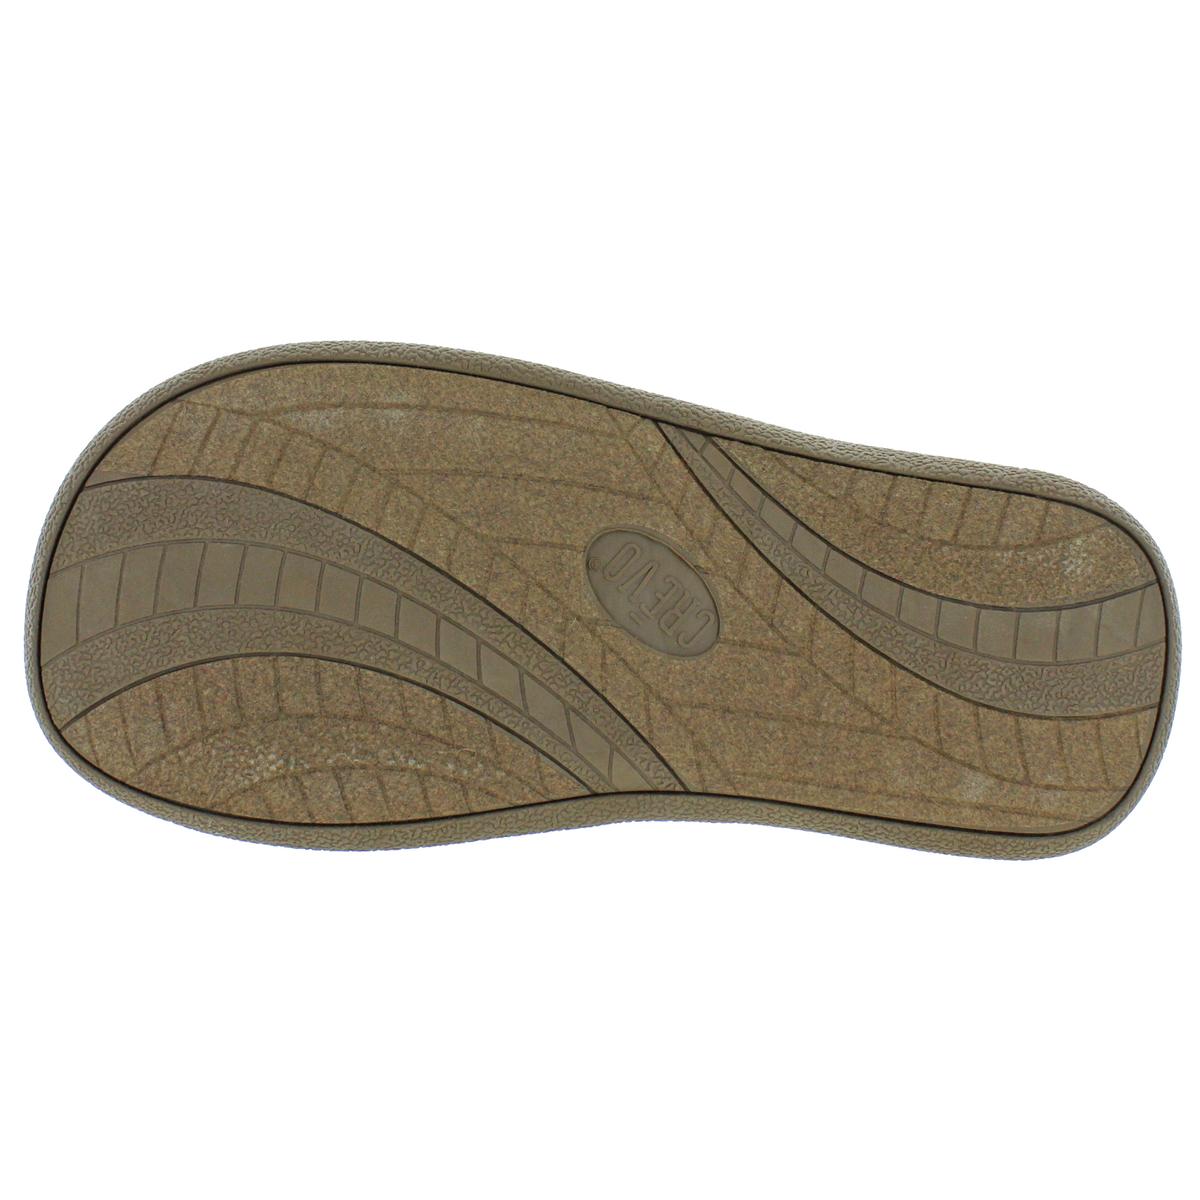 Crevo Cory Frayed Hemp Memory Foam Slide Sandals for Men | eBay